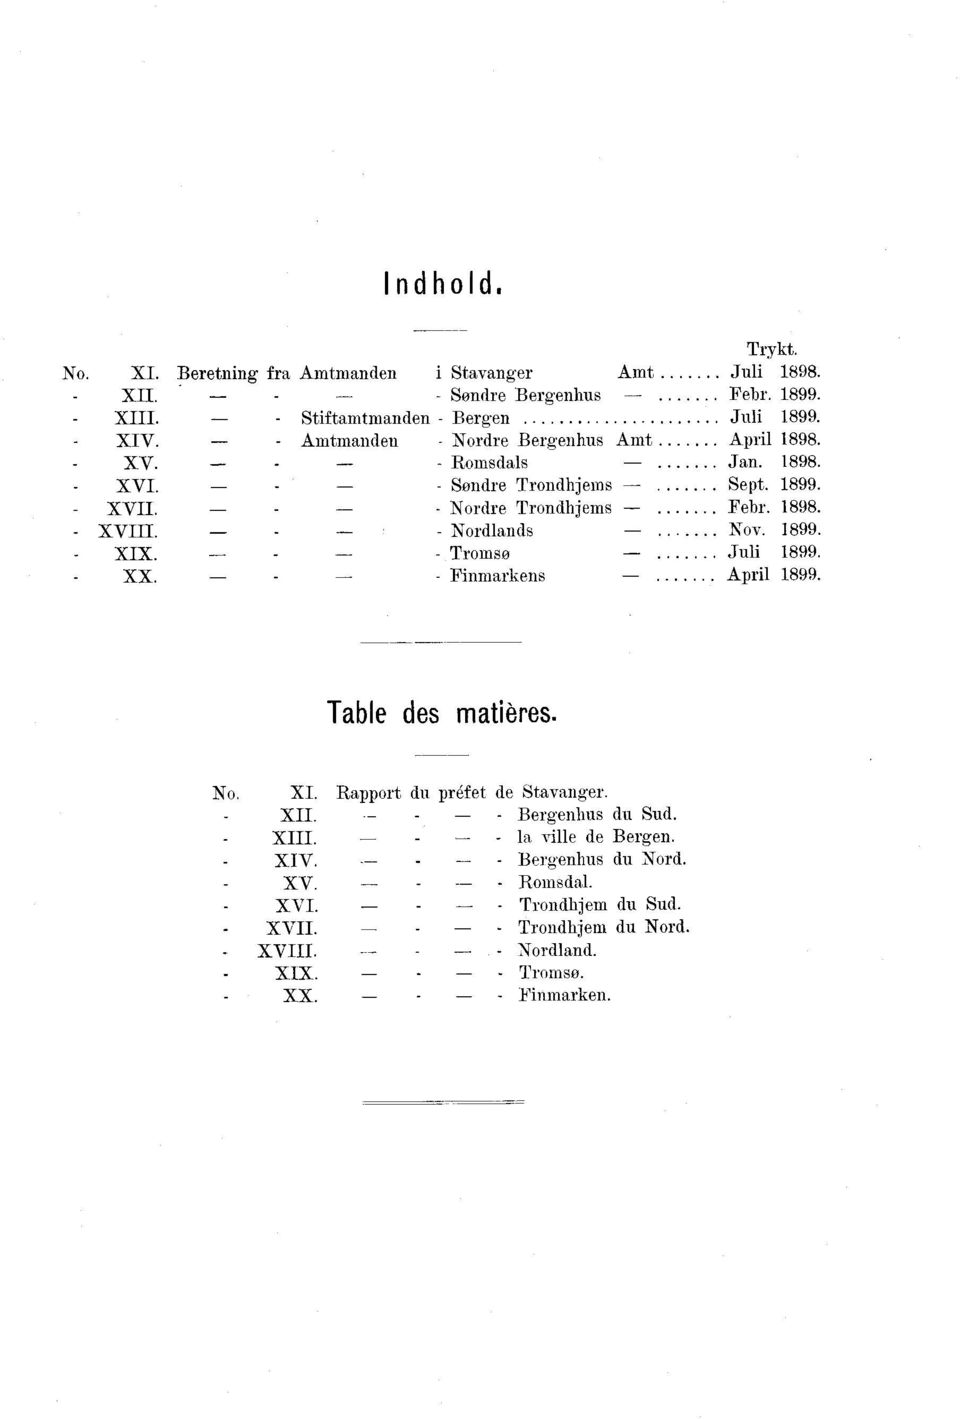 - - Nordlands Nov. 1899. XIX. - - Tromsø Juli 1899. XX. - - Finmarkens April 1899. Table des matières. No. XI. Rapport du préfet de Stavanger. - XII. Bergenhus du Sud.